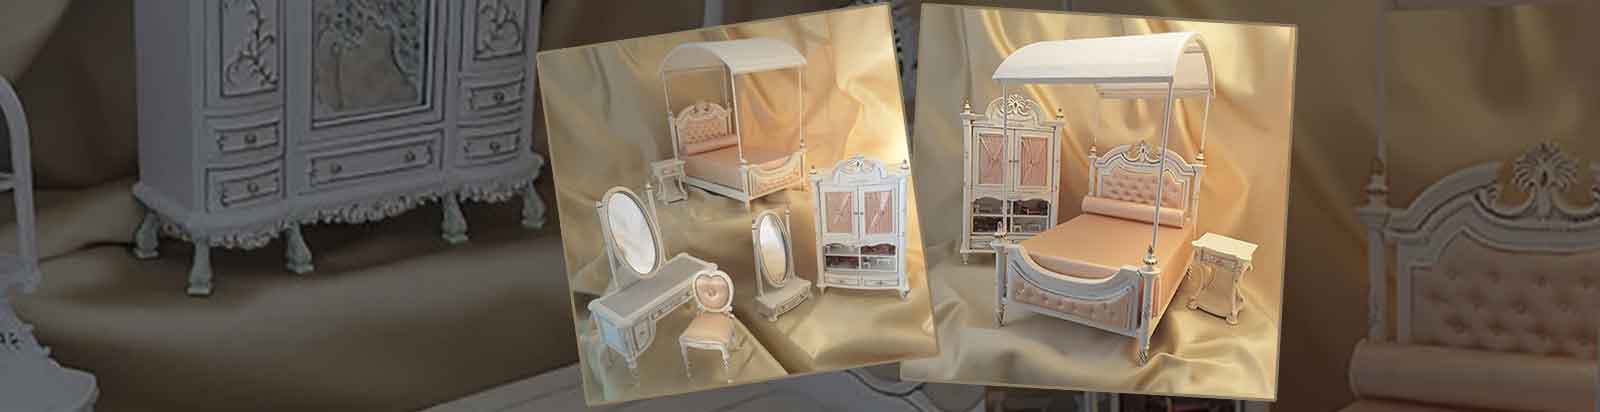 Black Mini Kitchen Furniture Kits for Dish Holder 1:12 Dollhouse Miniature 